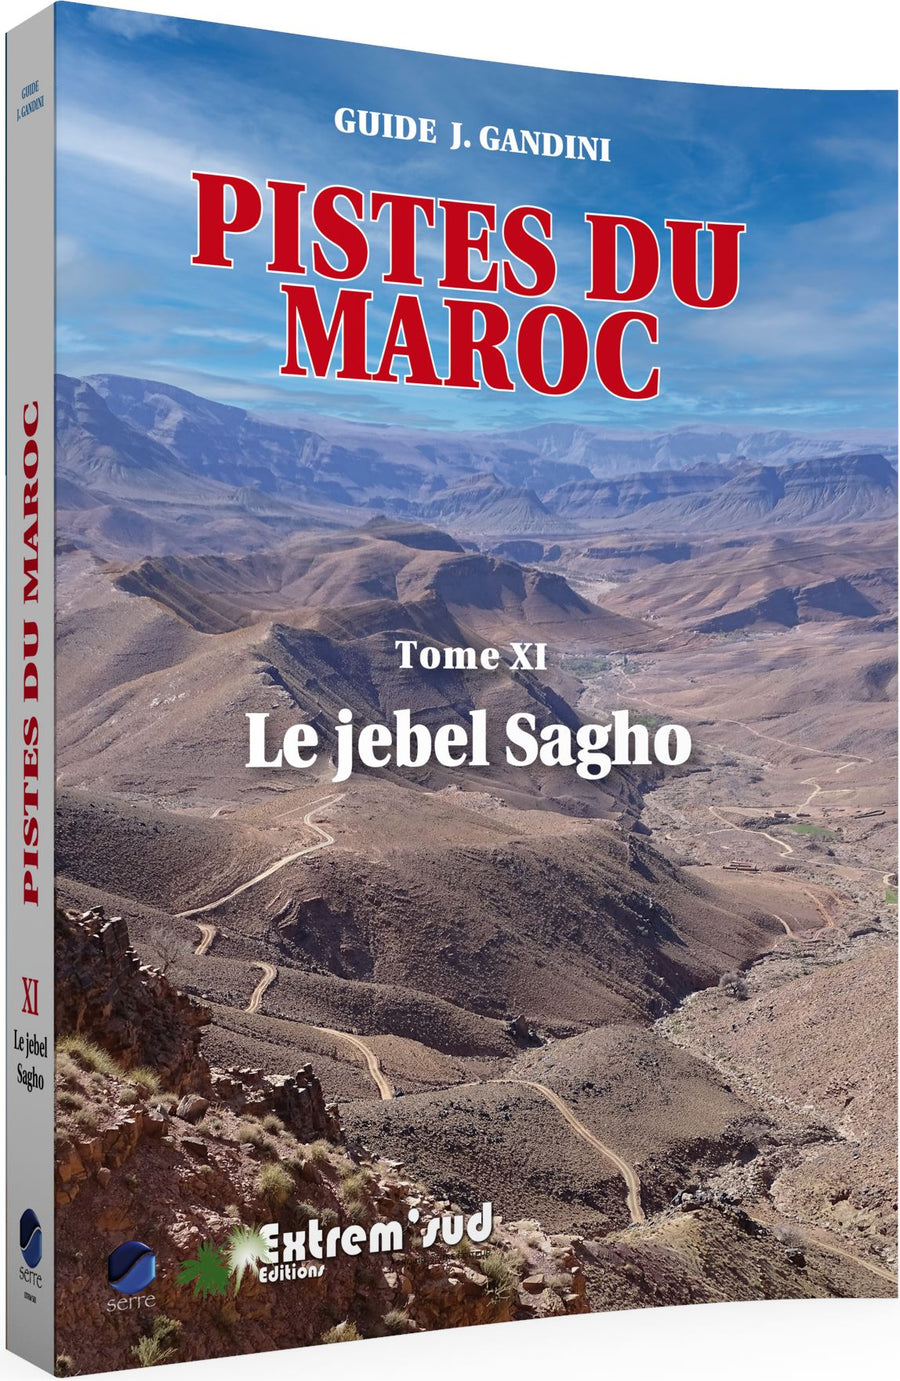 Guide Gandini - Pistes du Maroc : Le jebel Sagho - Tome 11 guide de voyage Extrem'Sud - Guides Gandini 